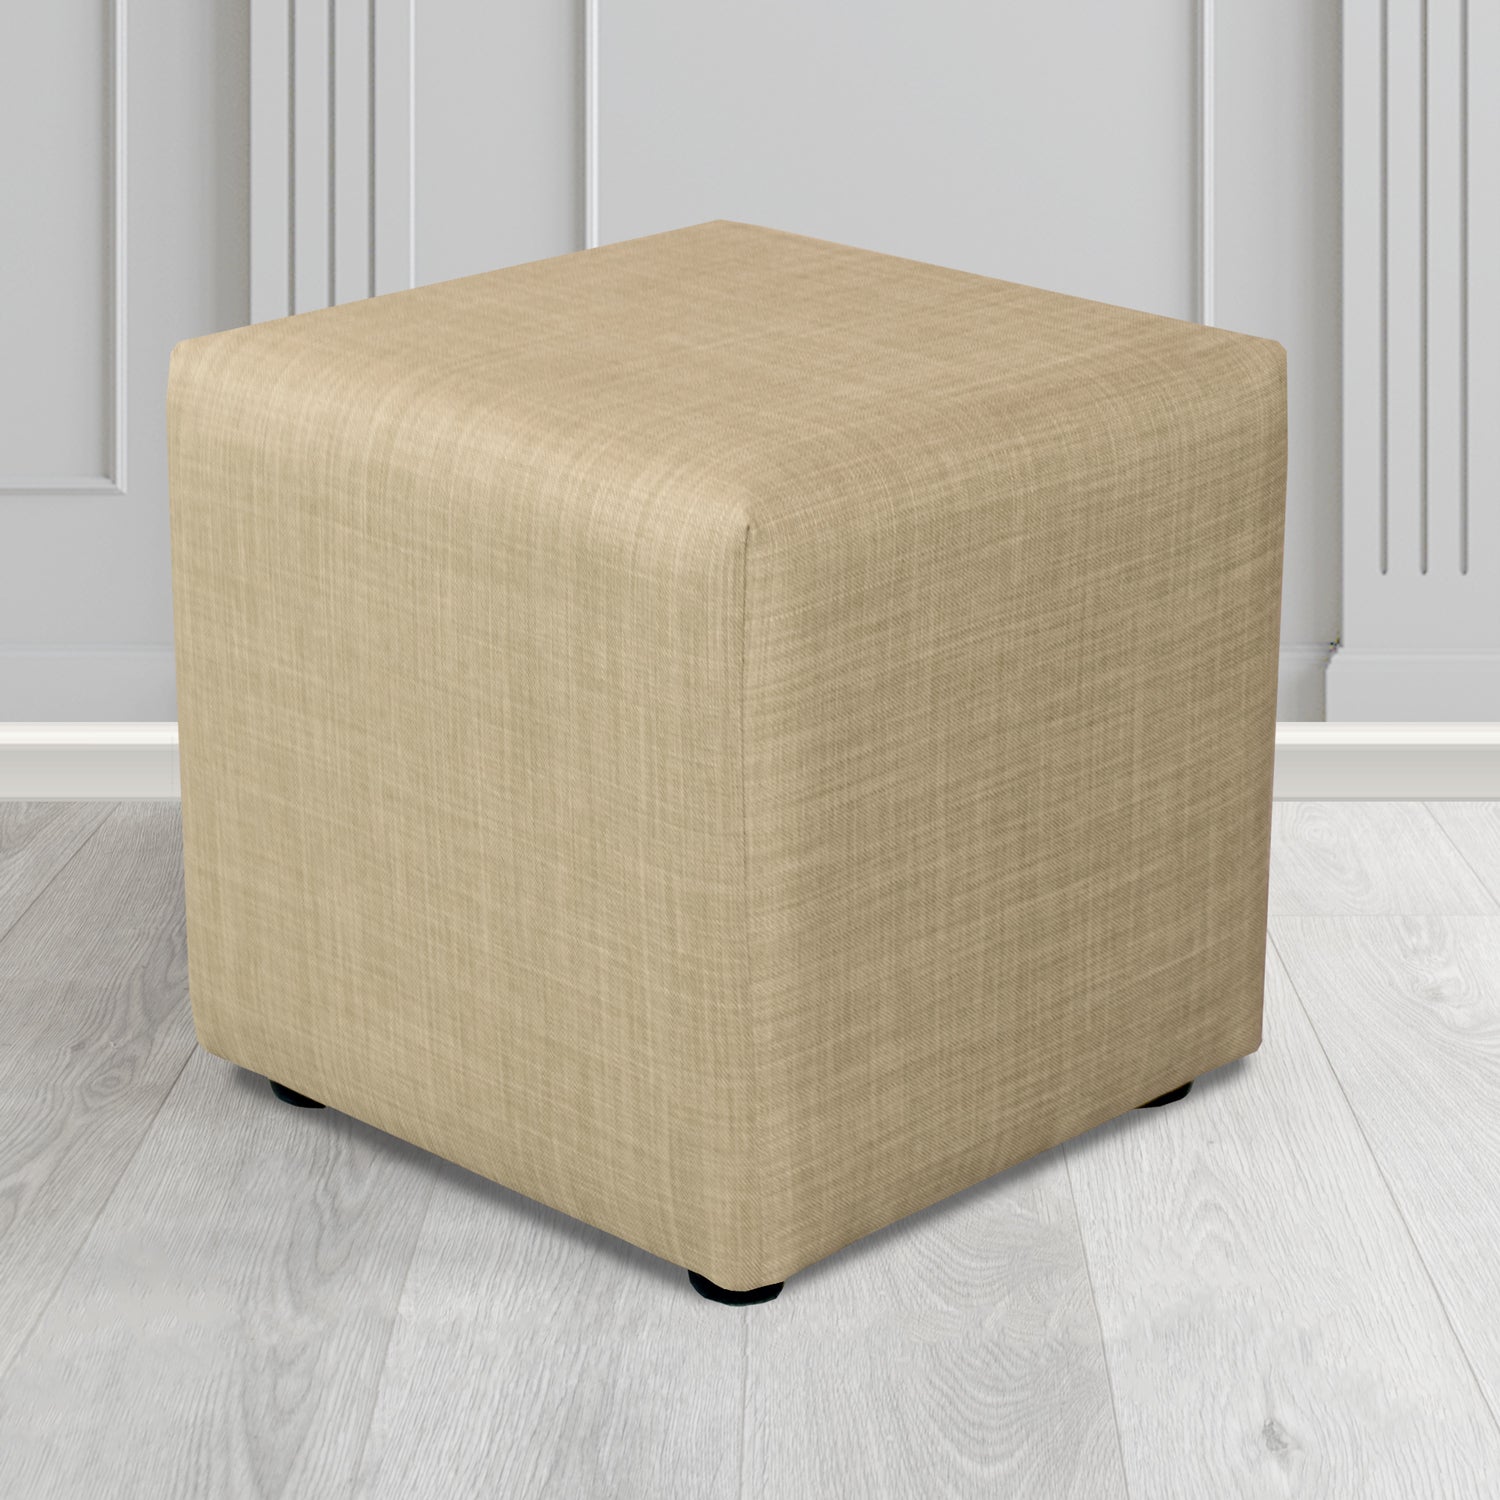 Paris Charles Mink Plain Linen Fabric Cube Footstool - The Tub Chair Shop